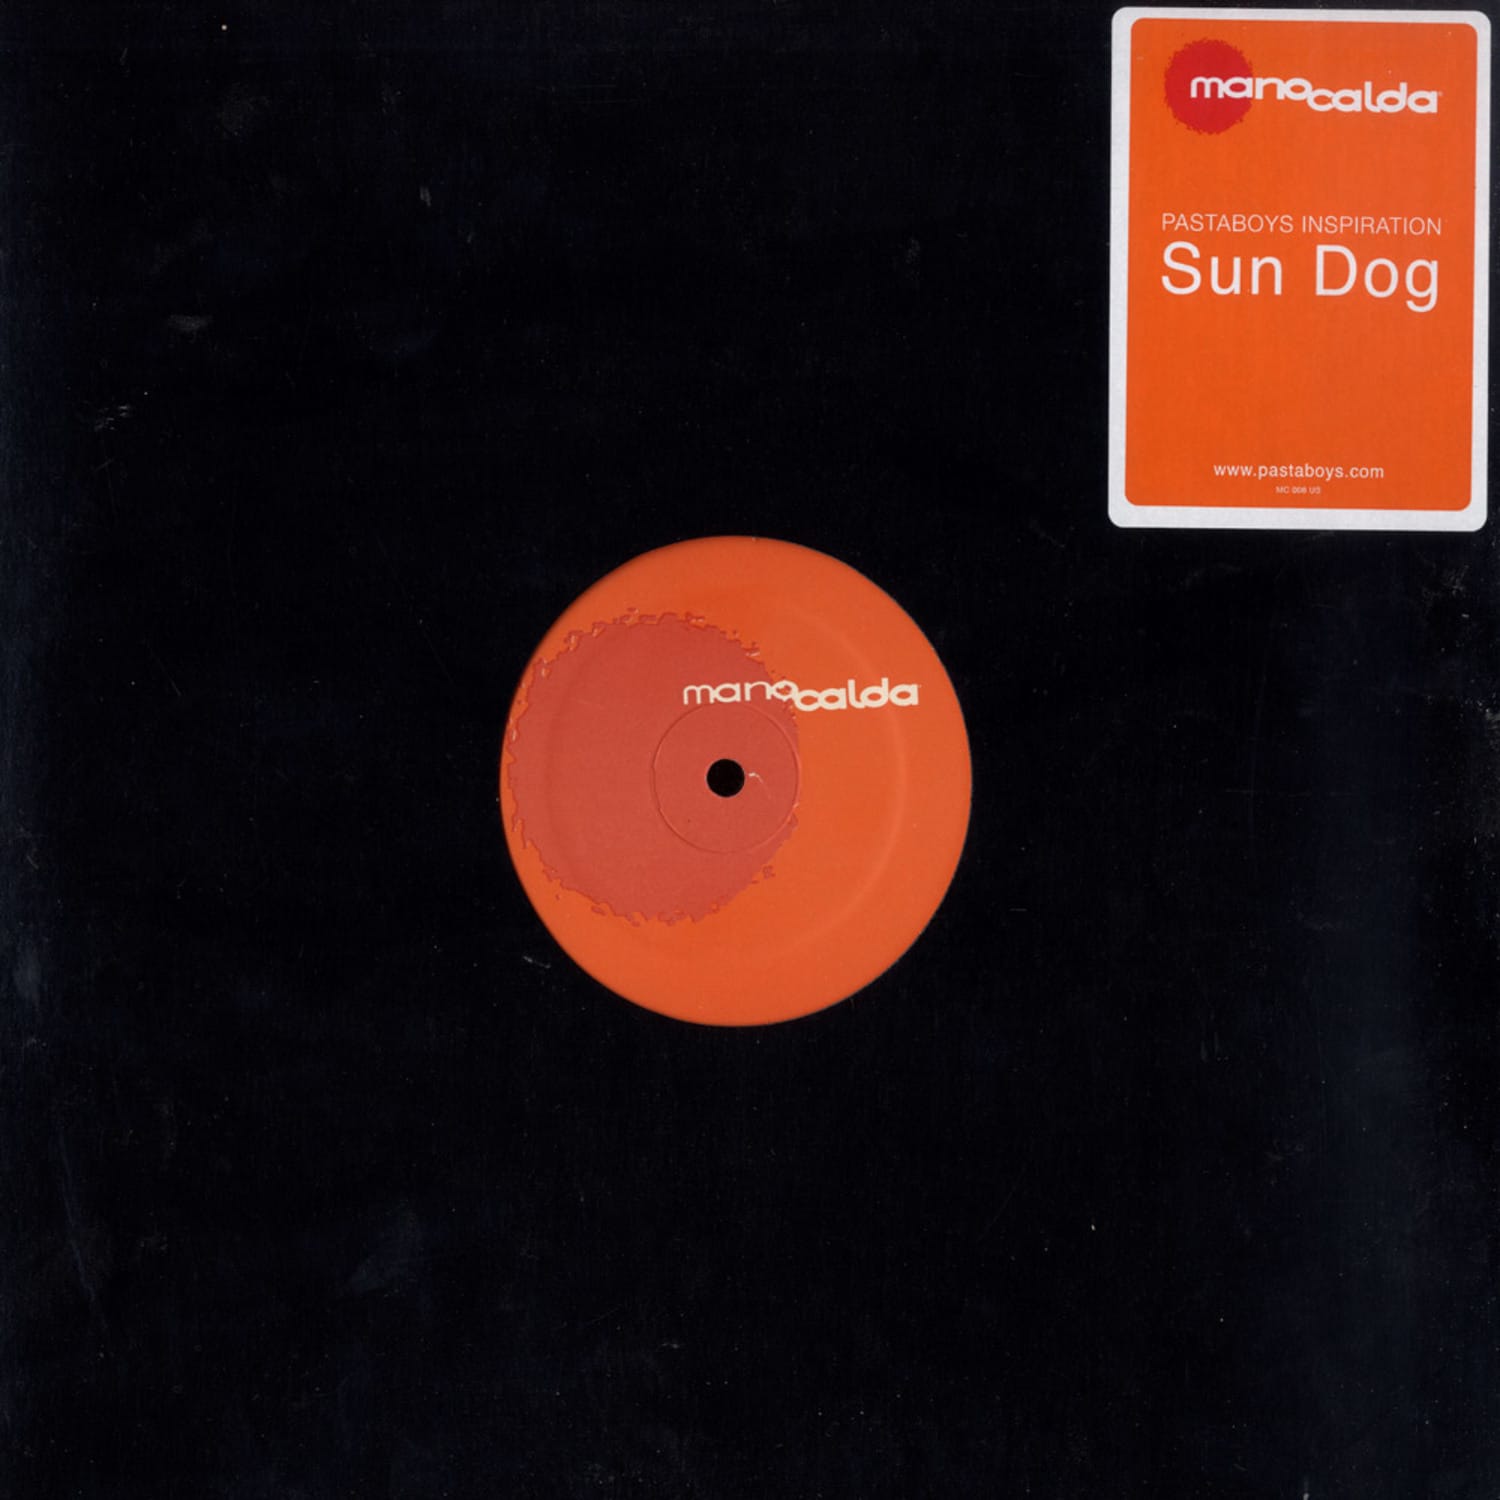 Pastaboys Inspiration - SUN DOG